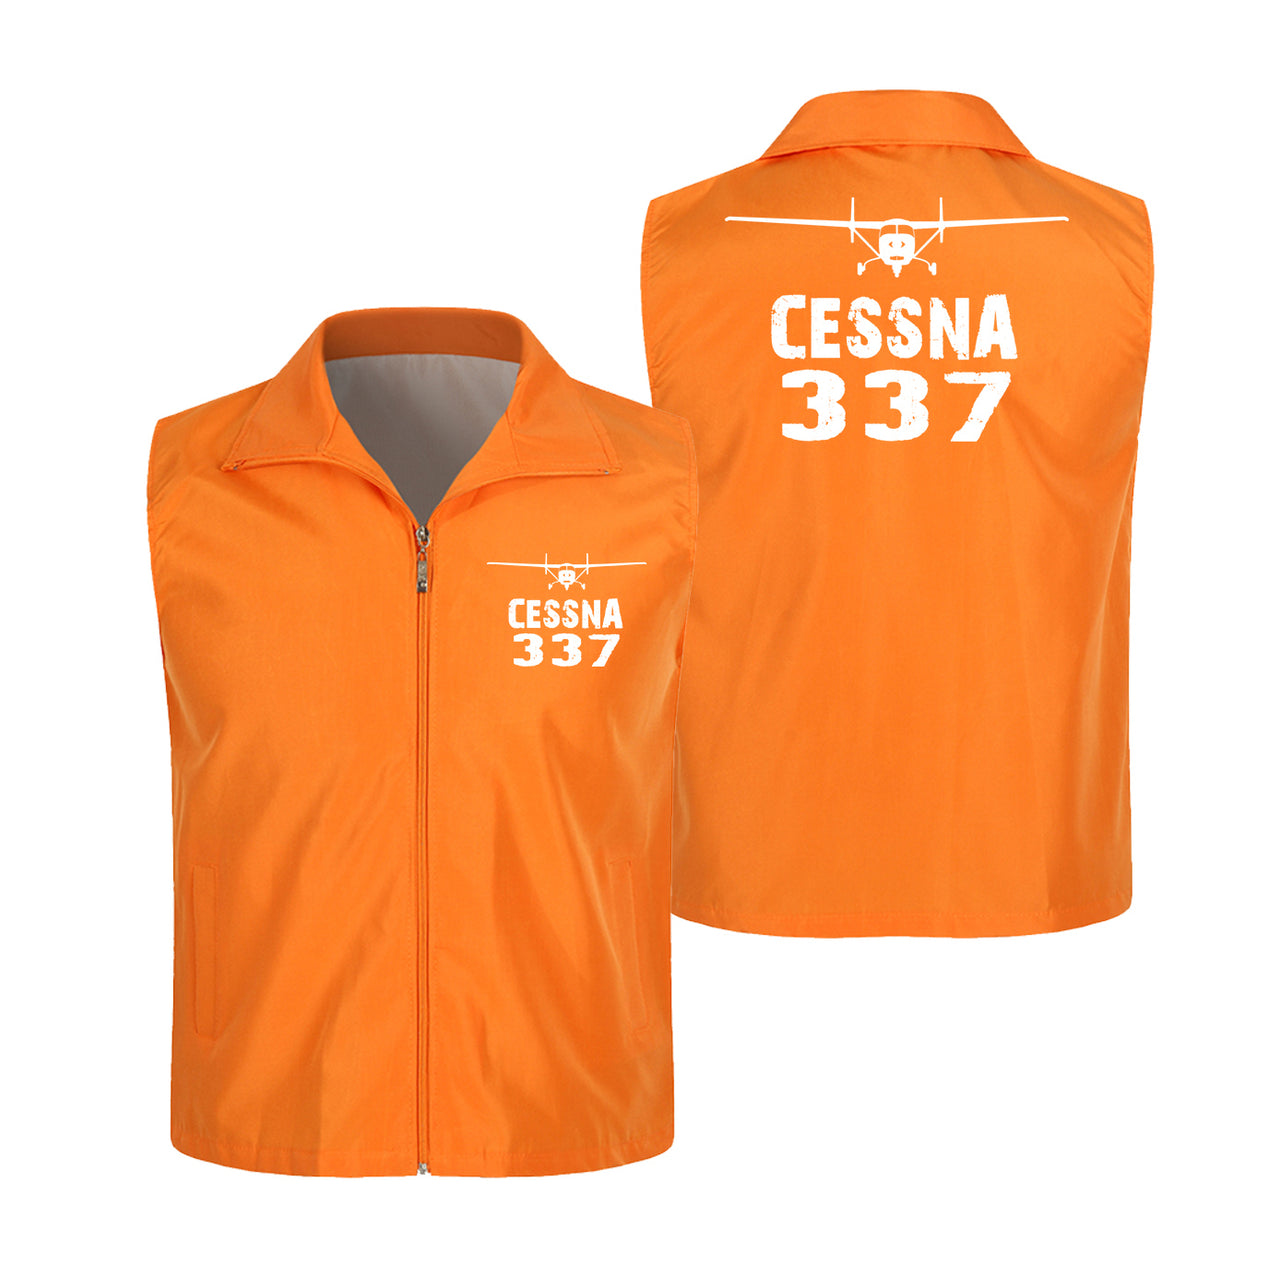 Cessna 337 & Plane Designed Thin Style Vests